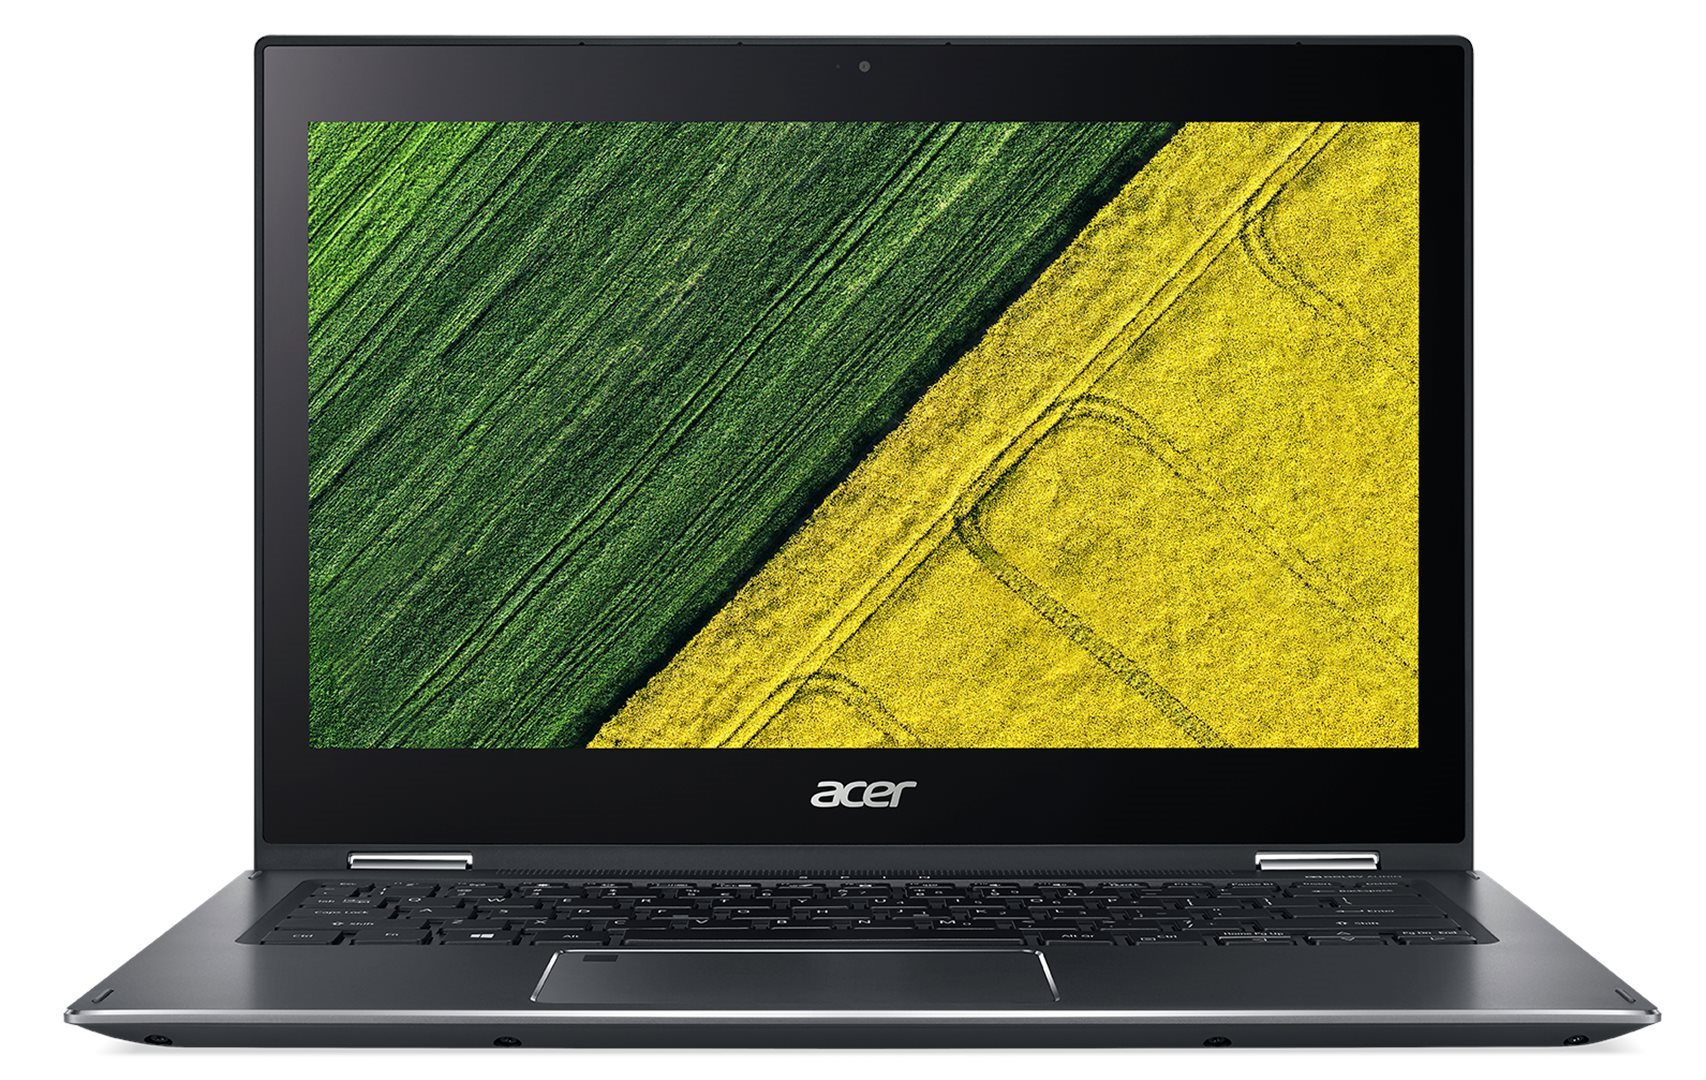 Acer Spin 5 Pro (SP513-53N-703J) i7-8565U/8GB+N/A/512GB SSD+N/A/HD Graphics/13.3" Multi-touch FHD IPS/BT/W10 Pro/Gray